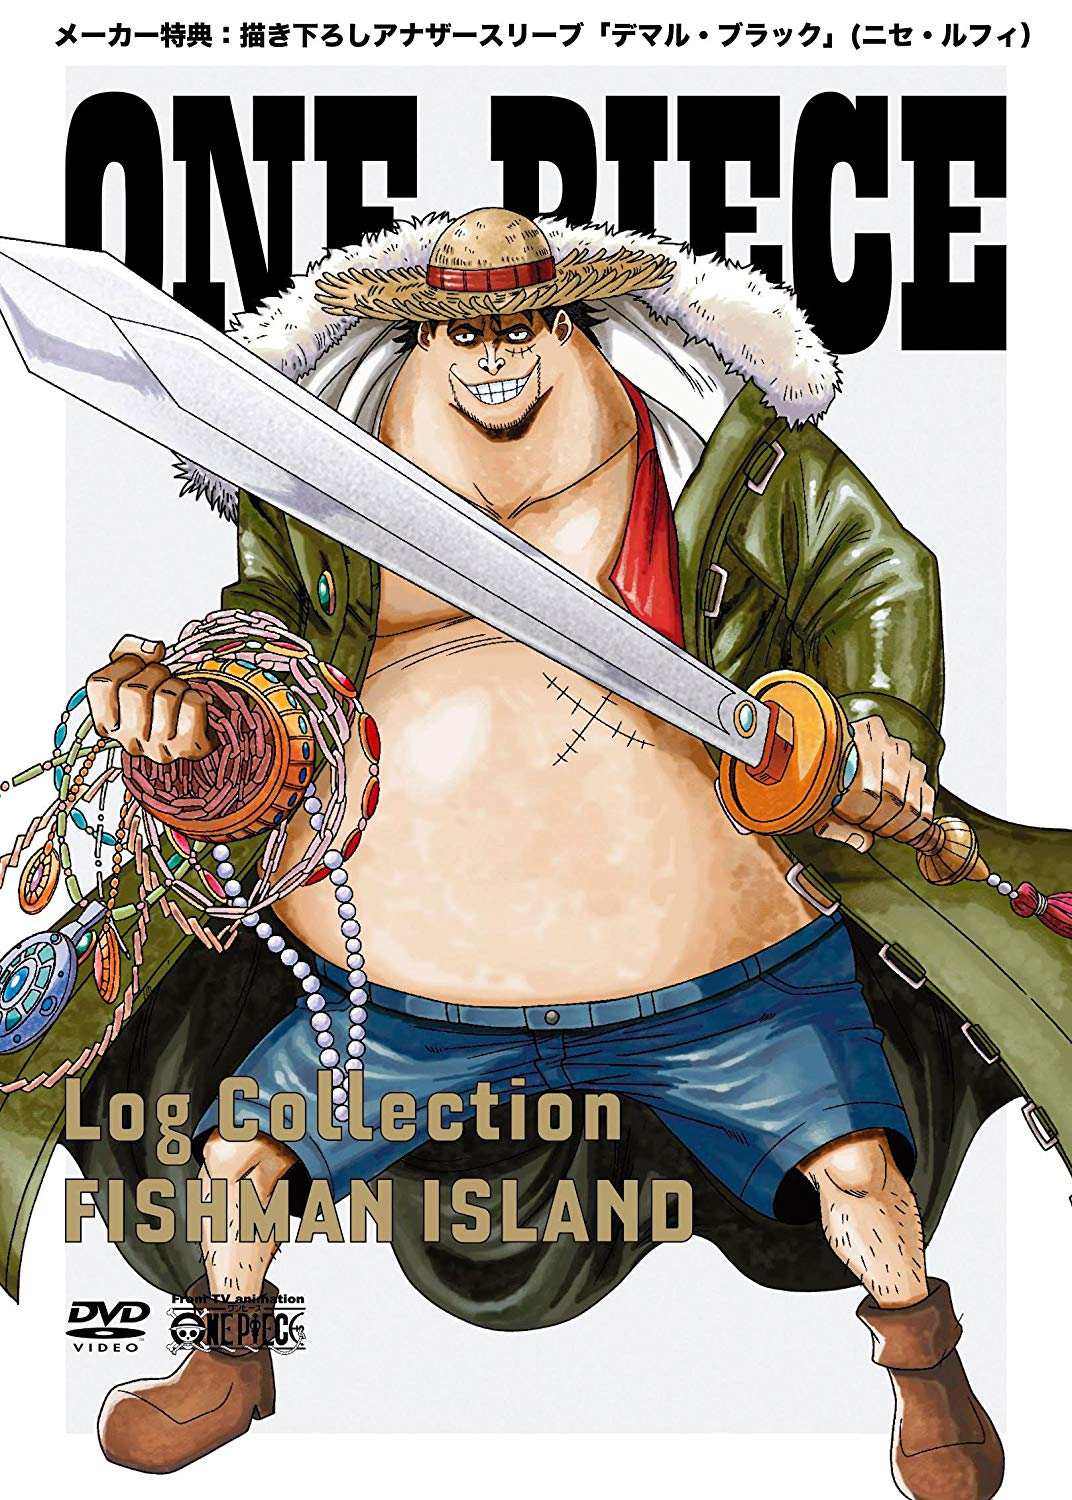 Rocks D. Xebec is Still ALIVE? / One Piece - BiliBili